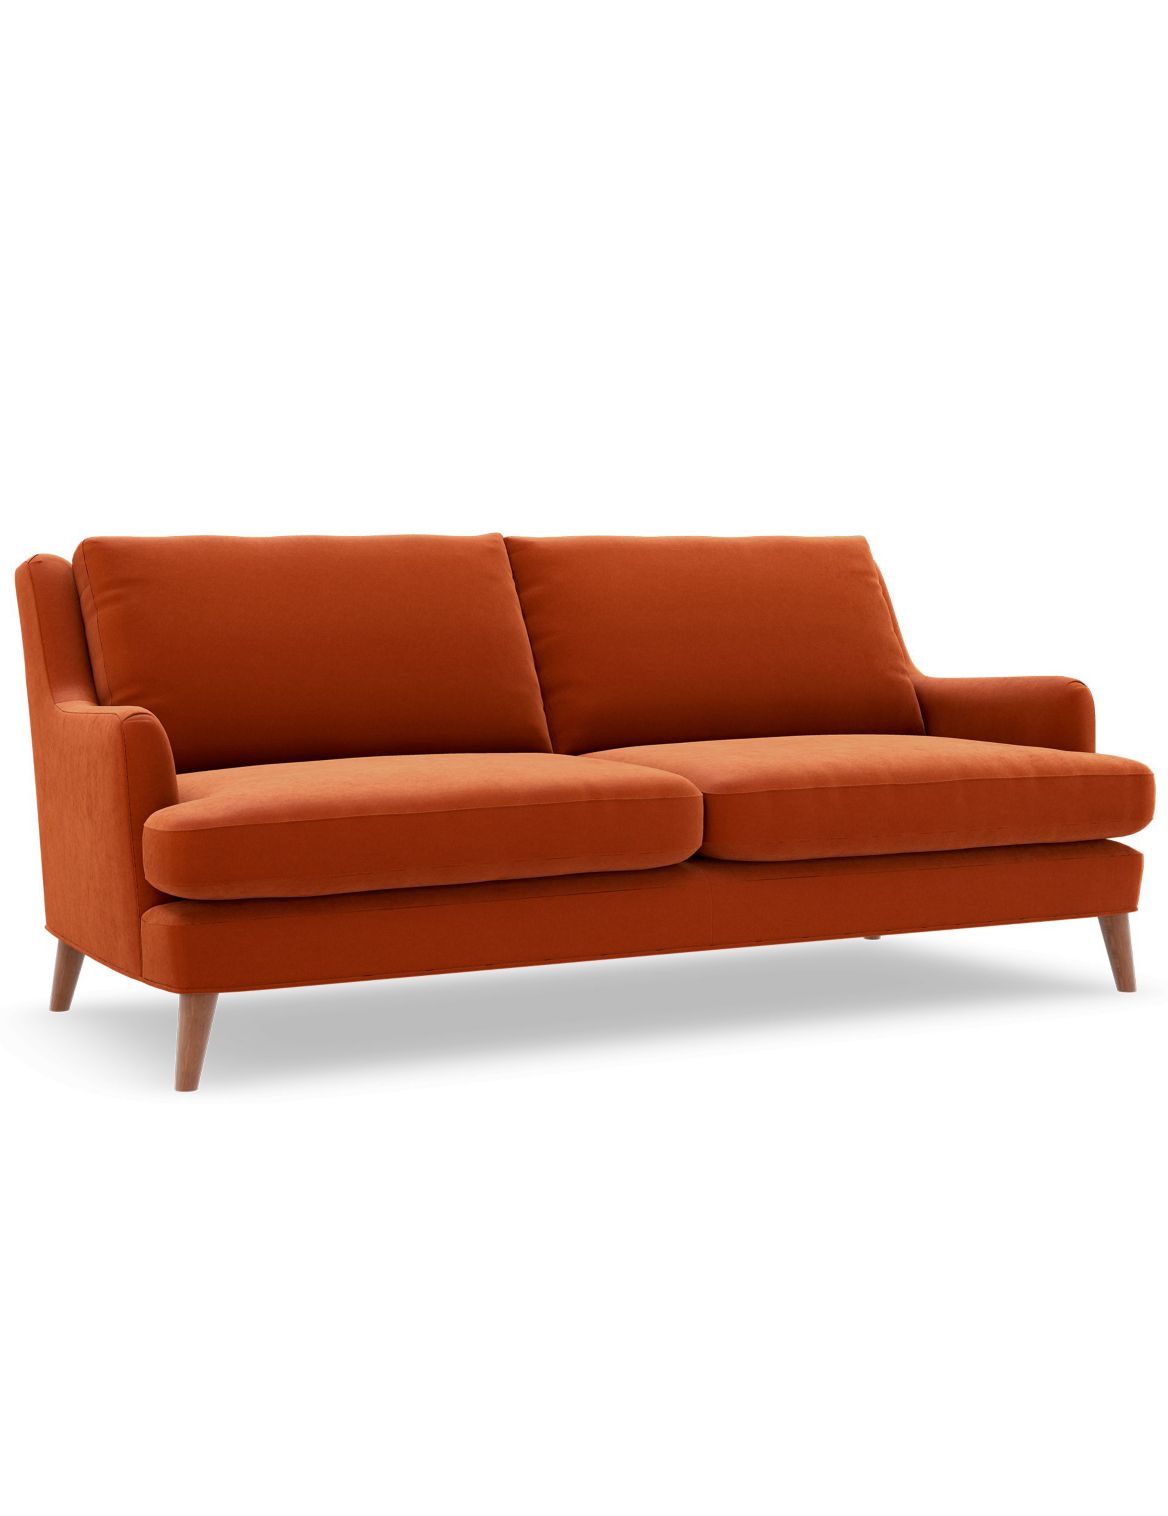 Ashton Large Sofa orange